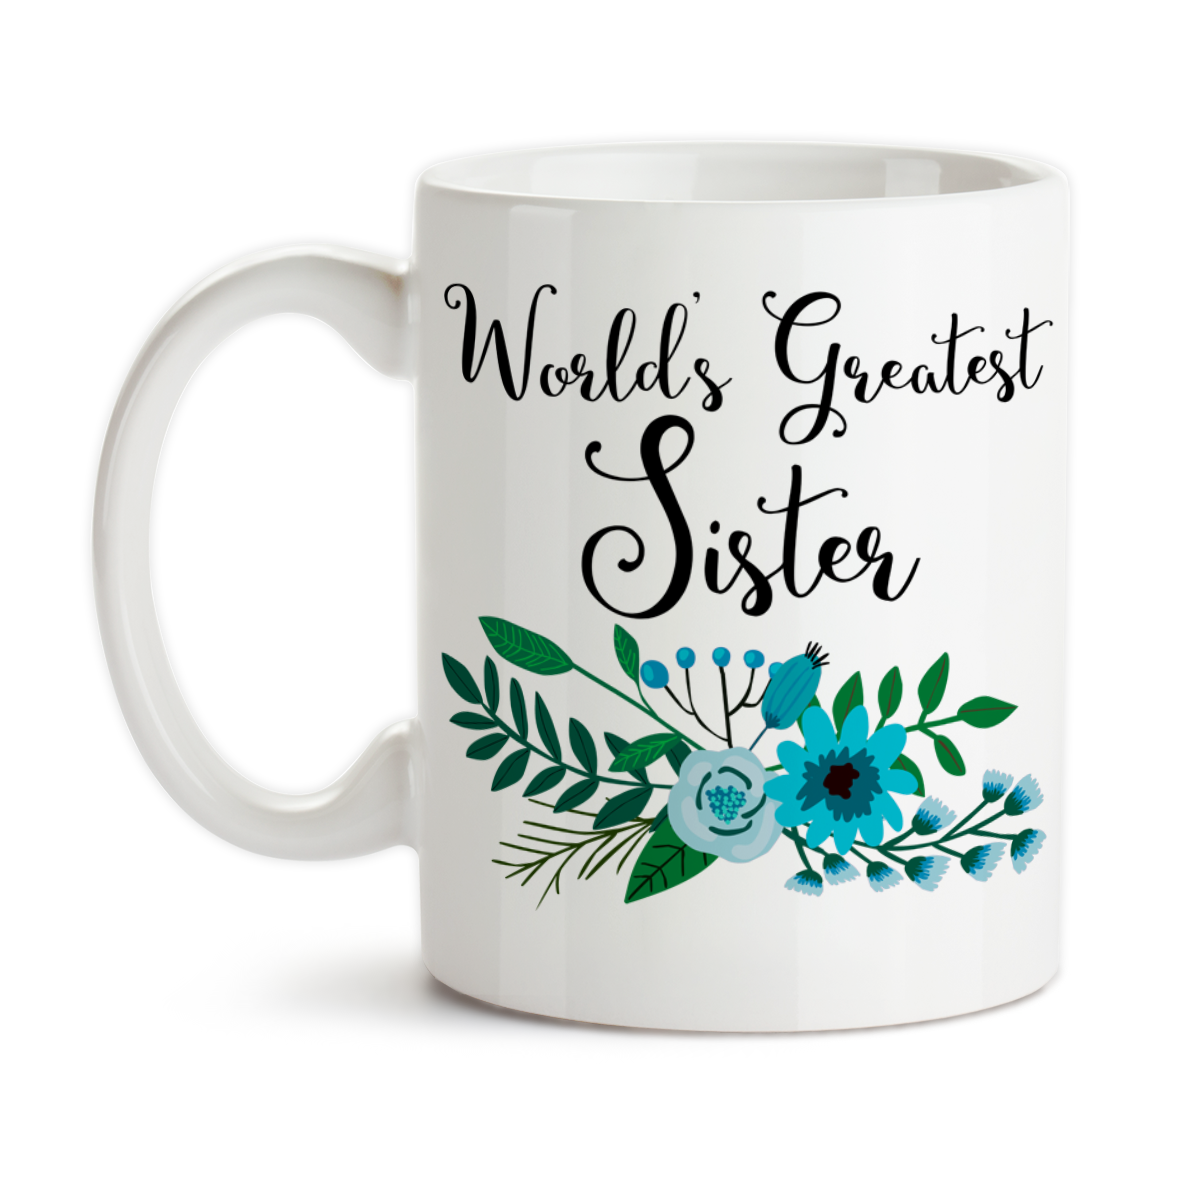 Best Sister Ever Mug | Funny Coffee Cup | Cute Coffee Mugs | 11 Ounce